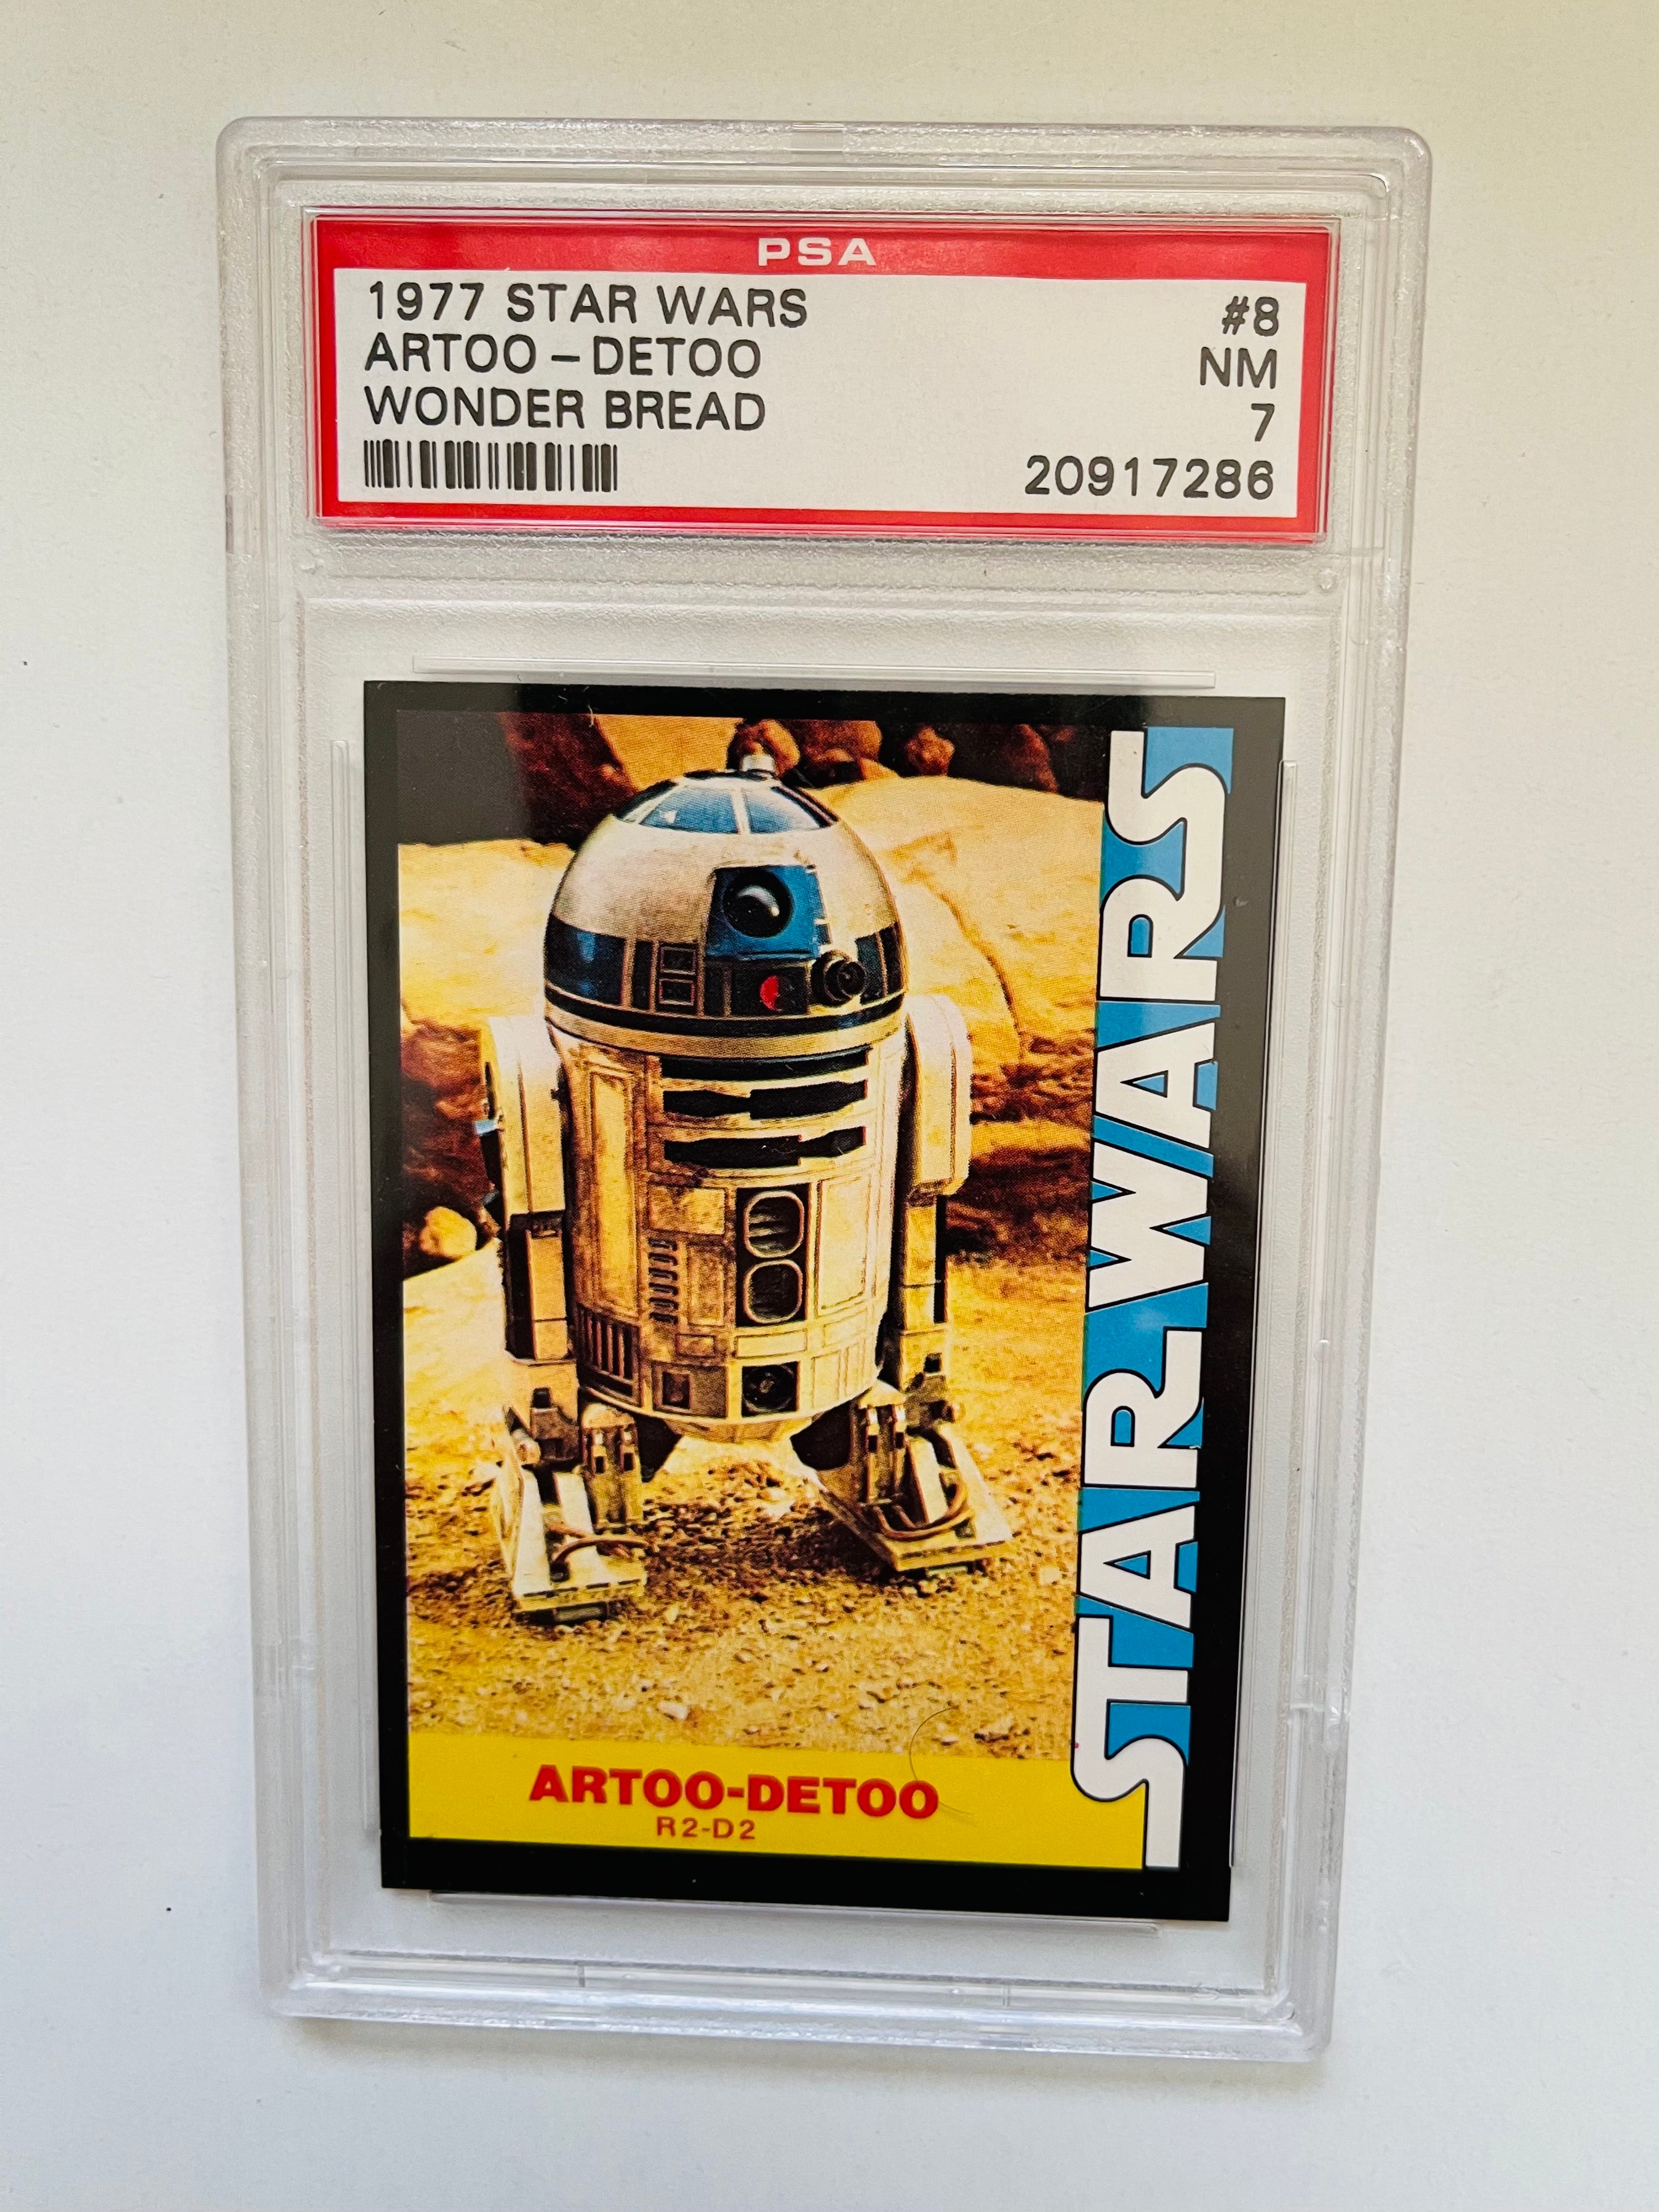 Star Wars R2D2 wonder bread PSA 7 card 1977